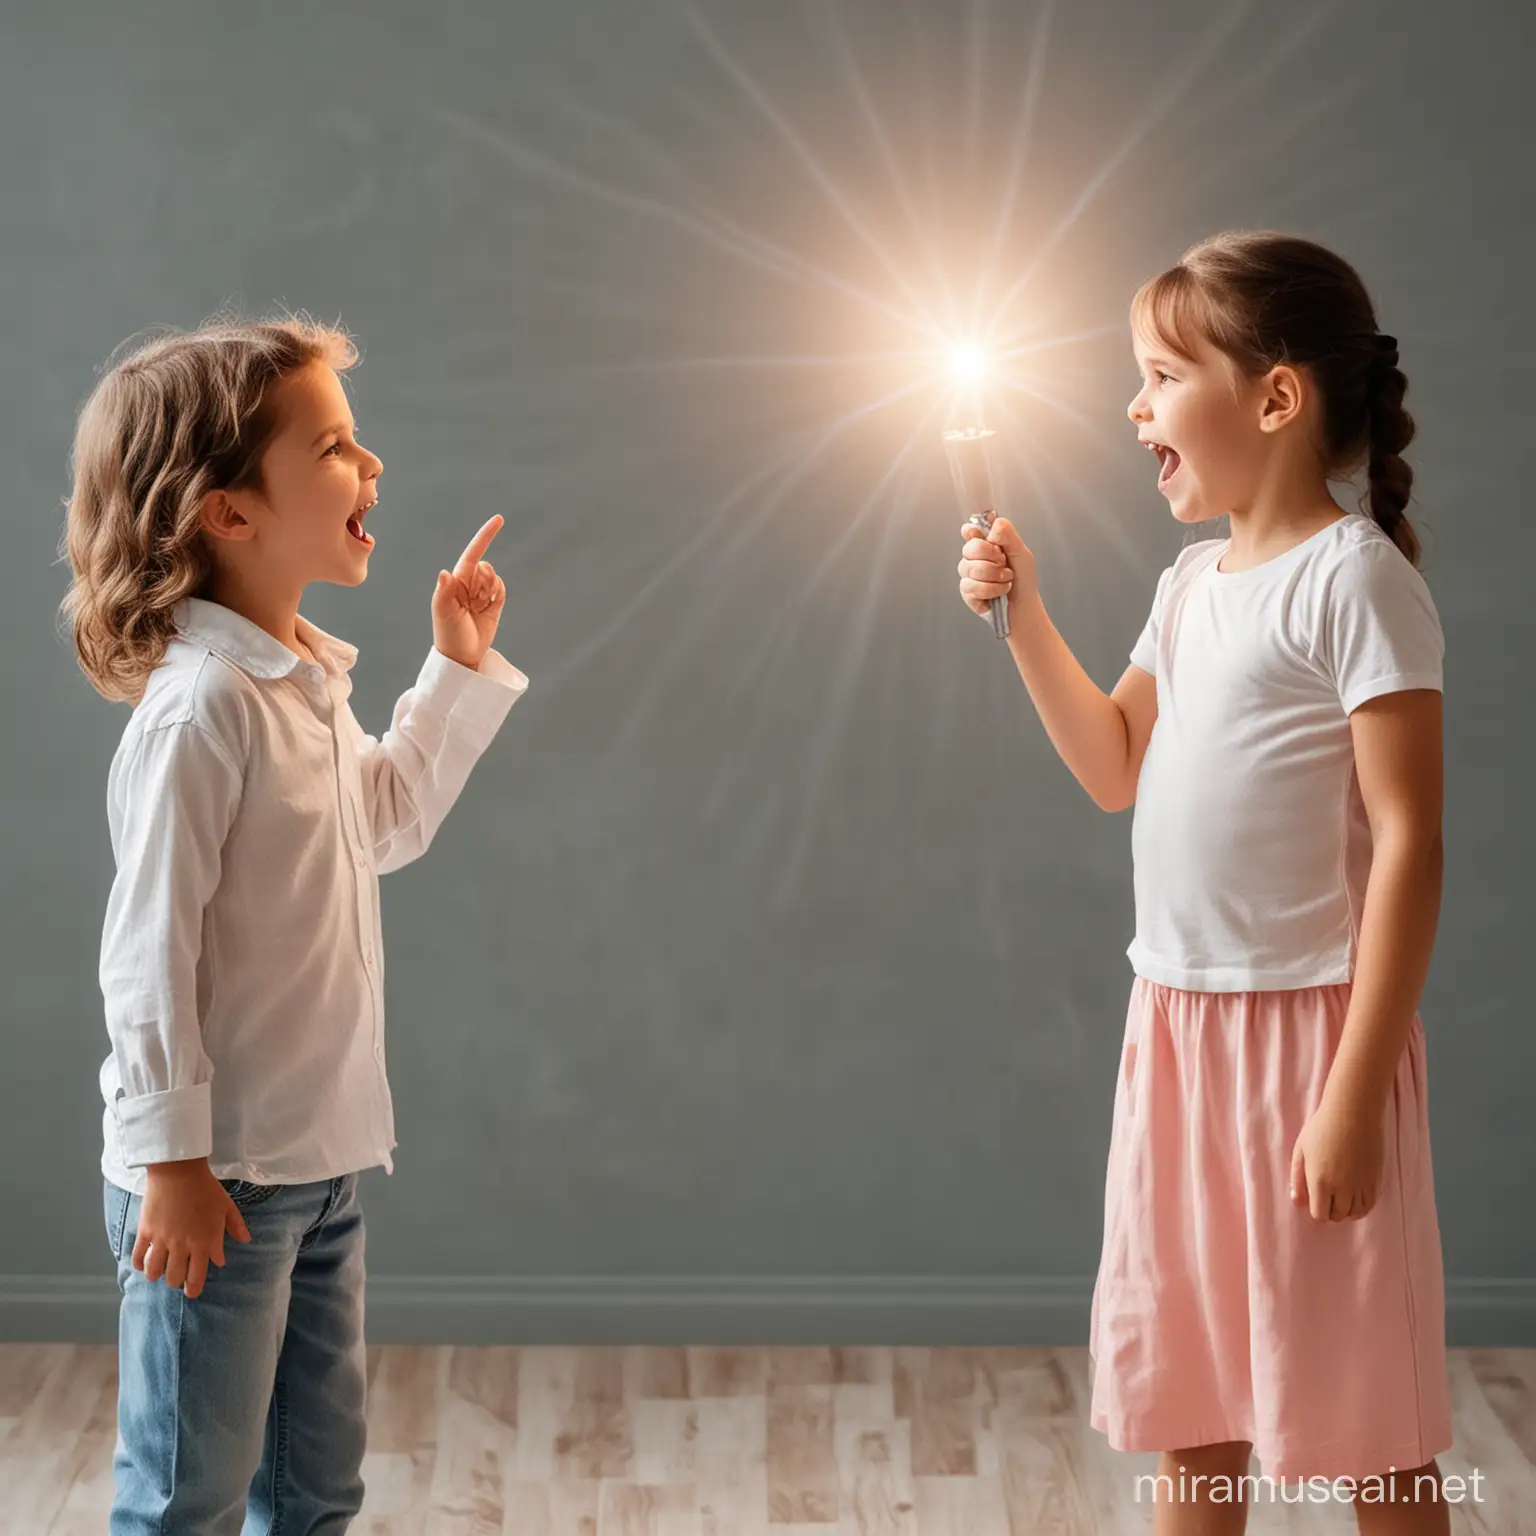 Two Energetic Kids Engaging in Conversation